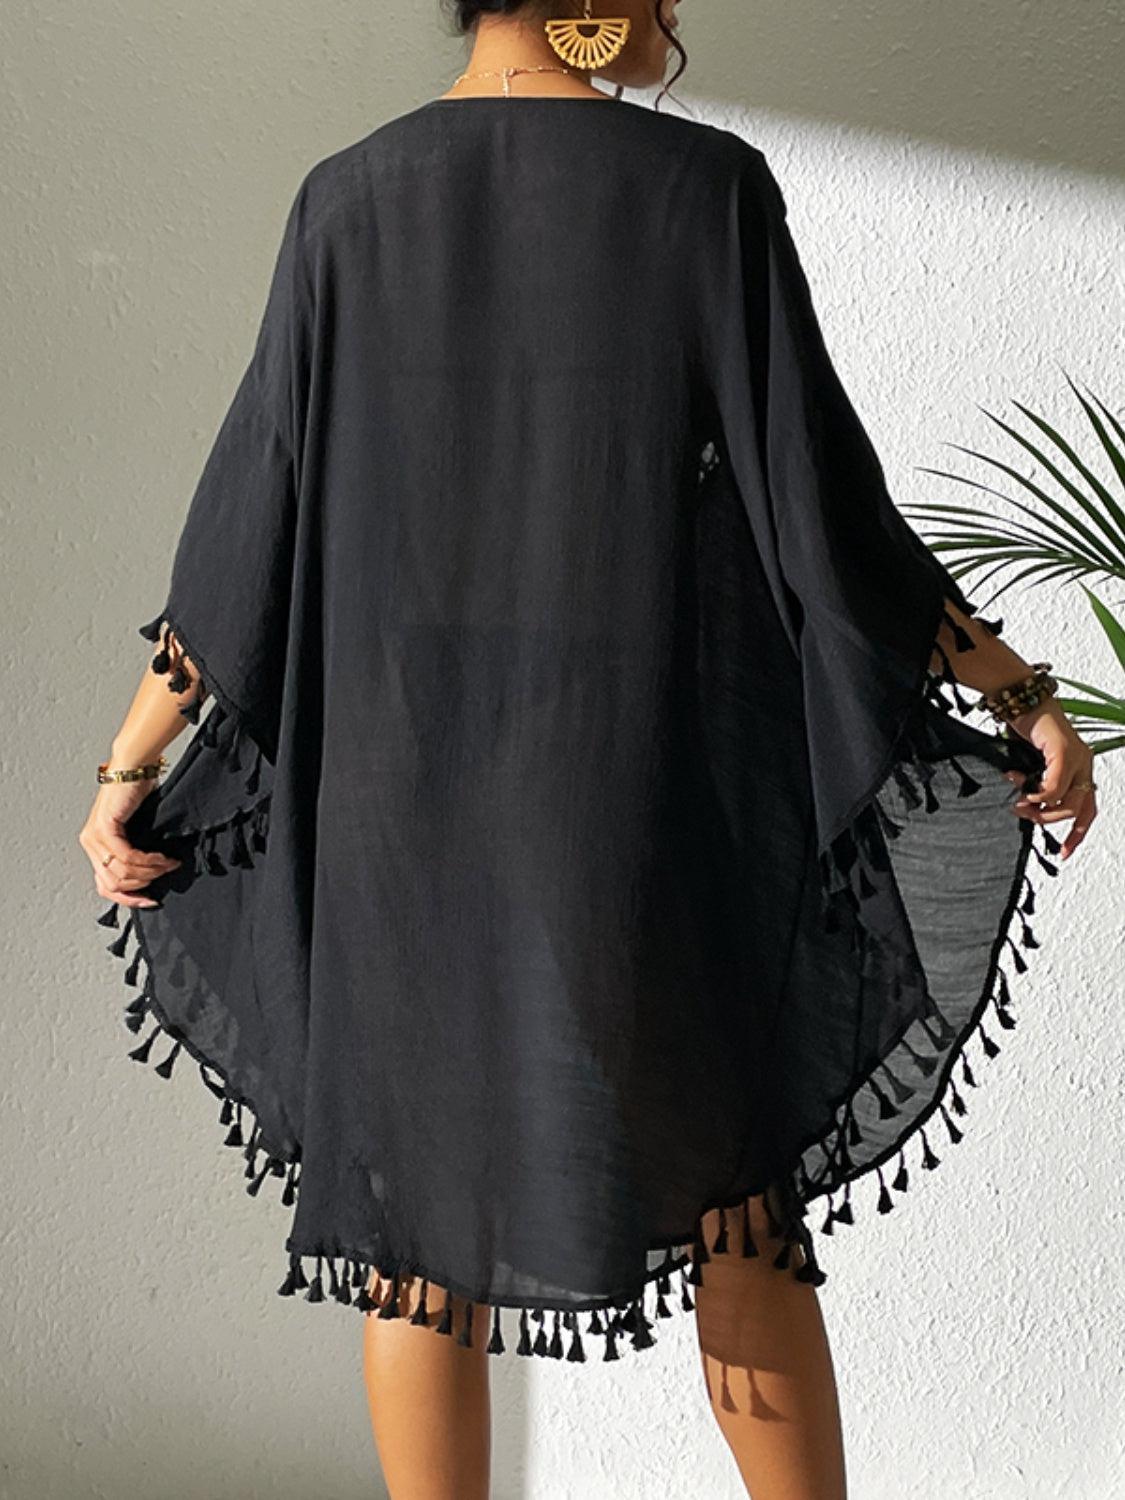 a woman wearing a black dress with tassels